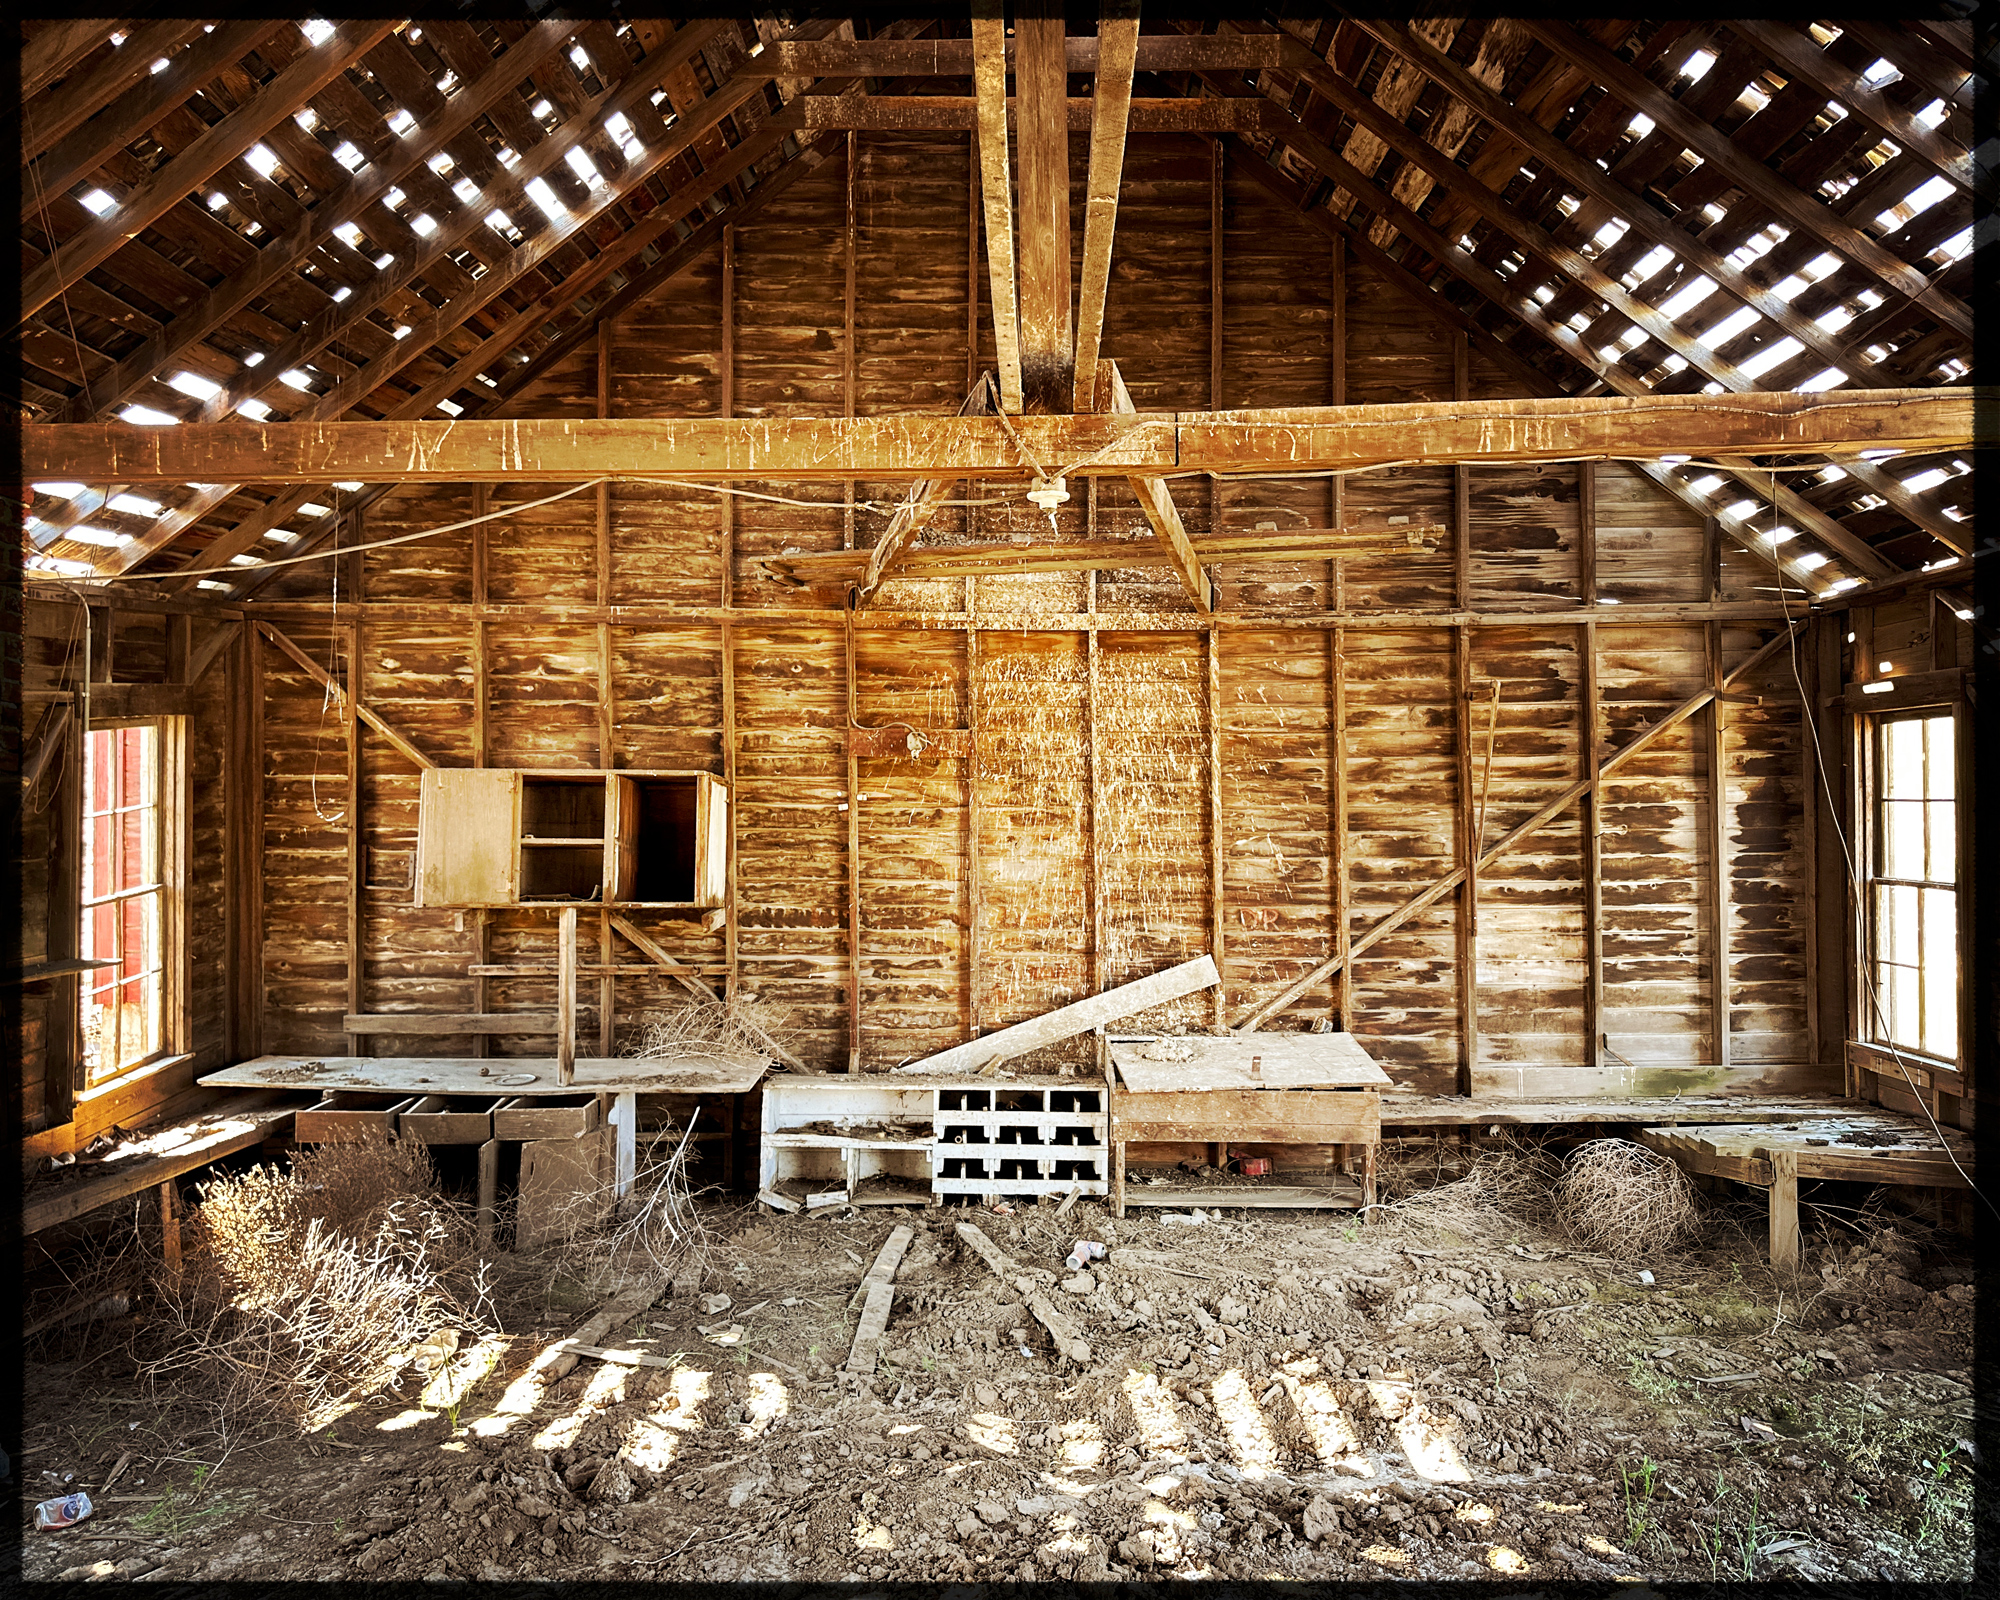 An abandoned barn